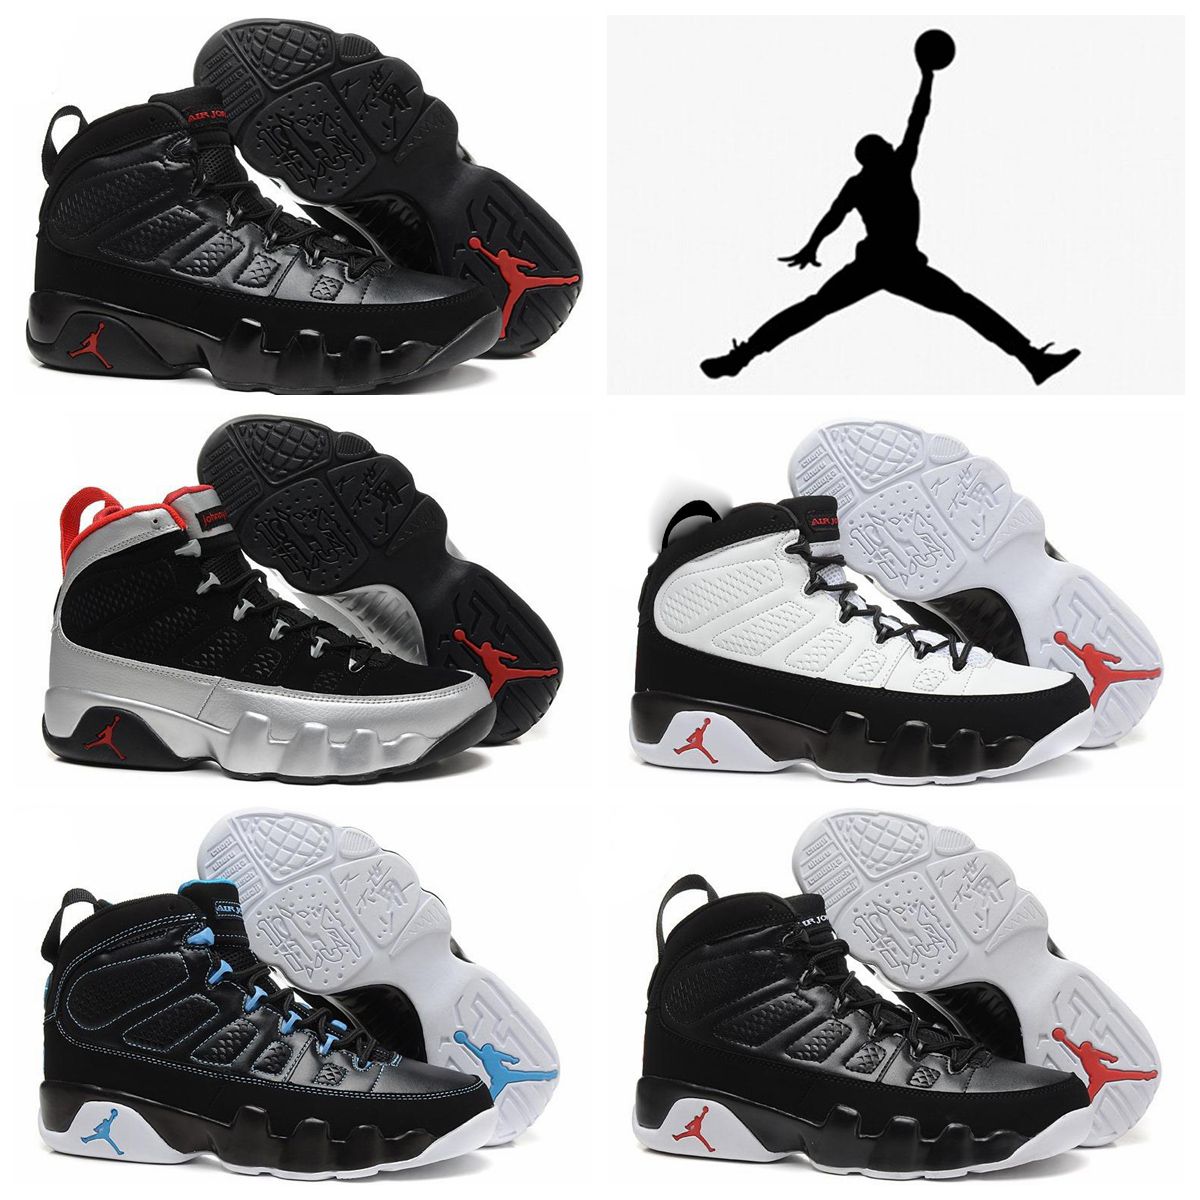 Nike Air Jordan 9 Retro Mens Basketball Shoes, Cheap Original Quality Nike Jordans 9 Basketball ...